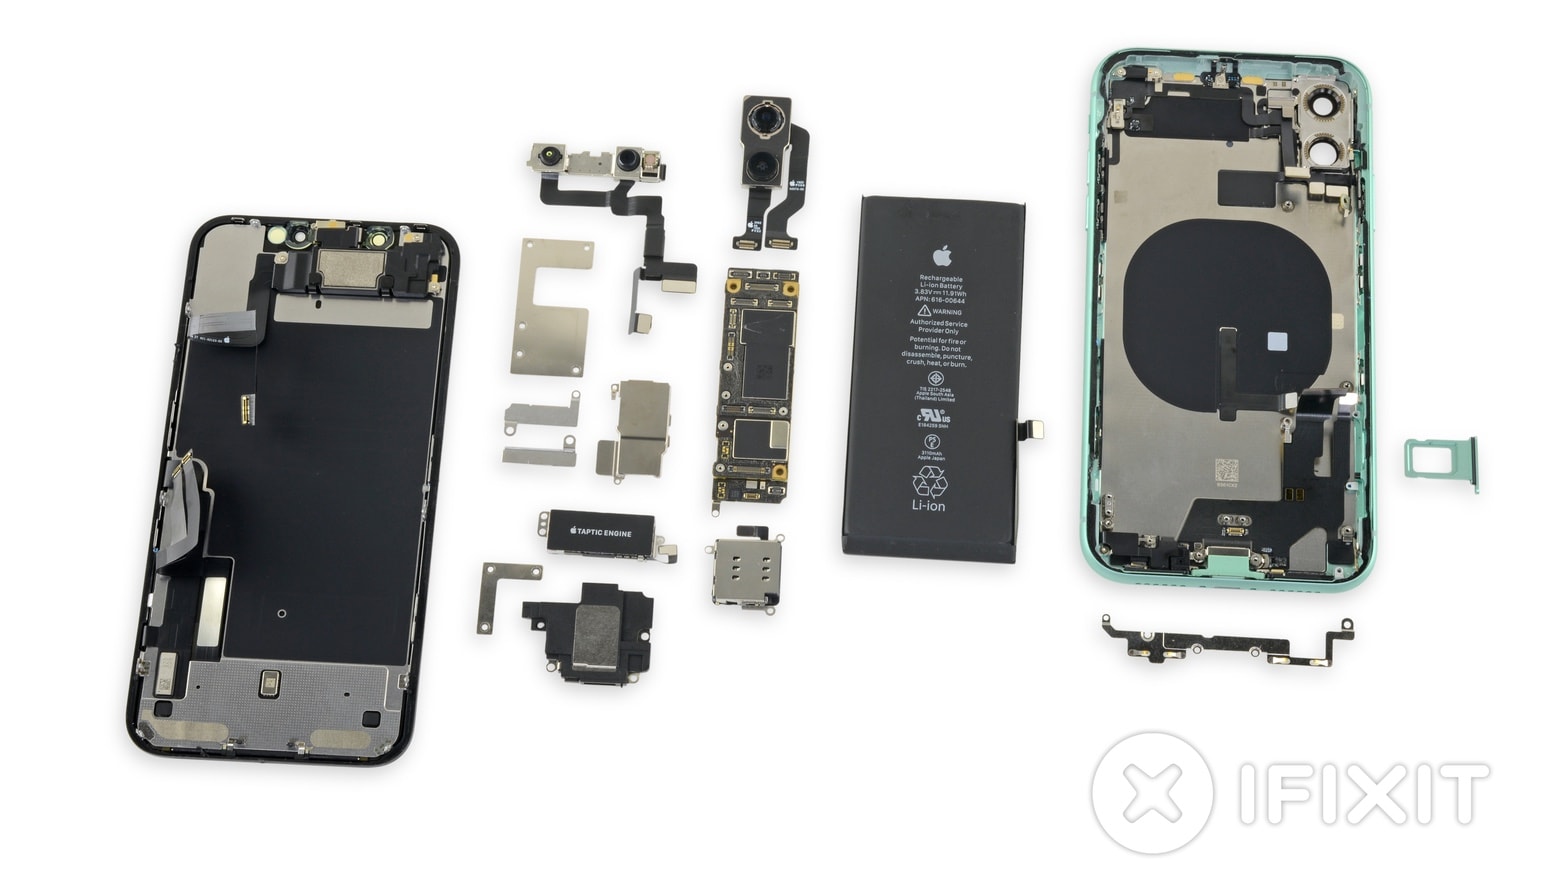 iPhone 11 teardown disassembled